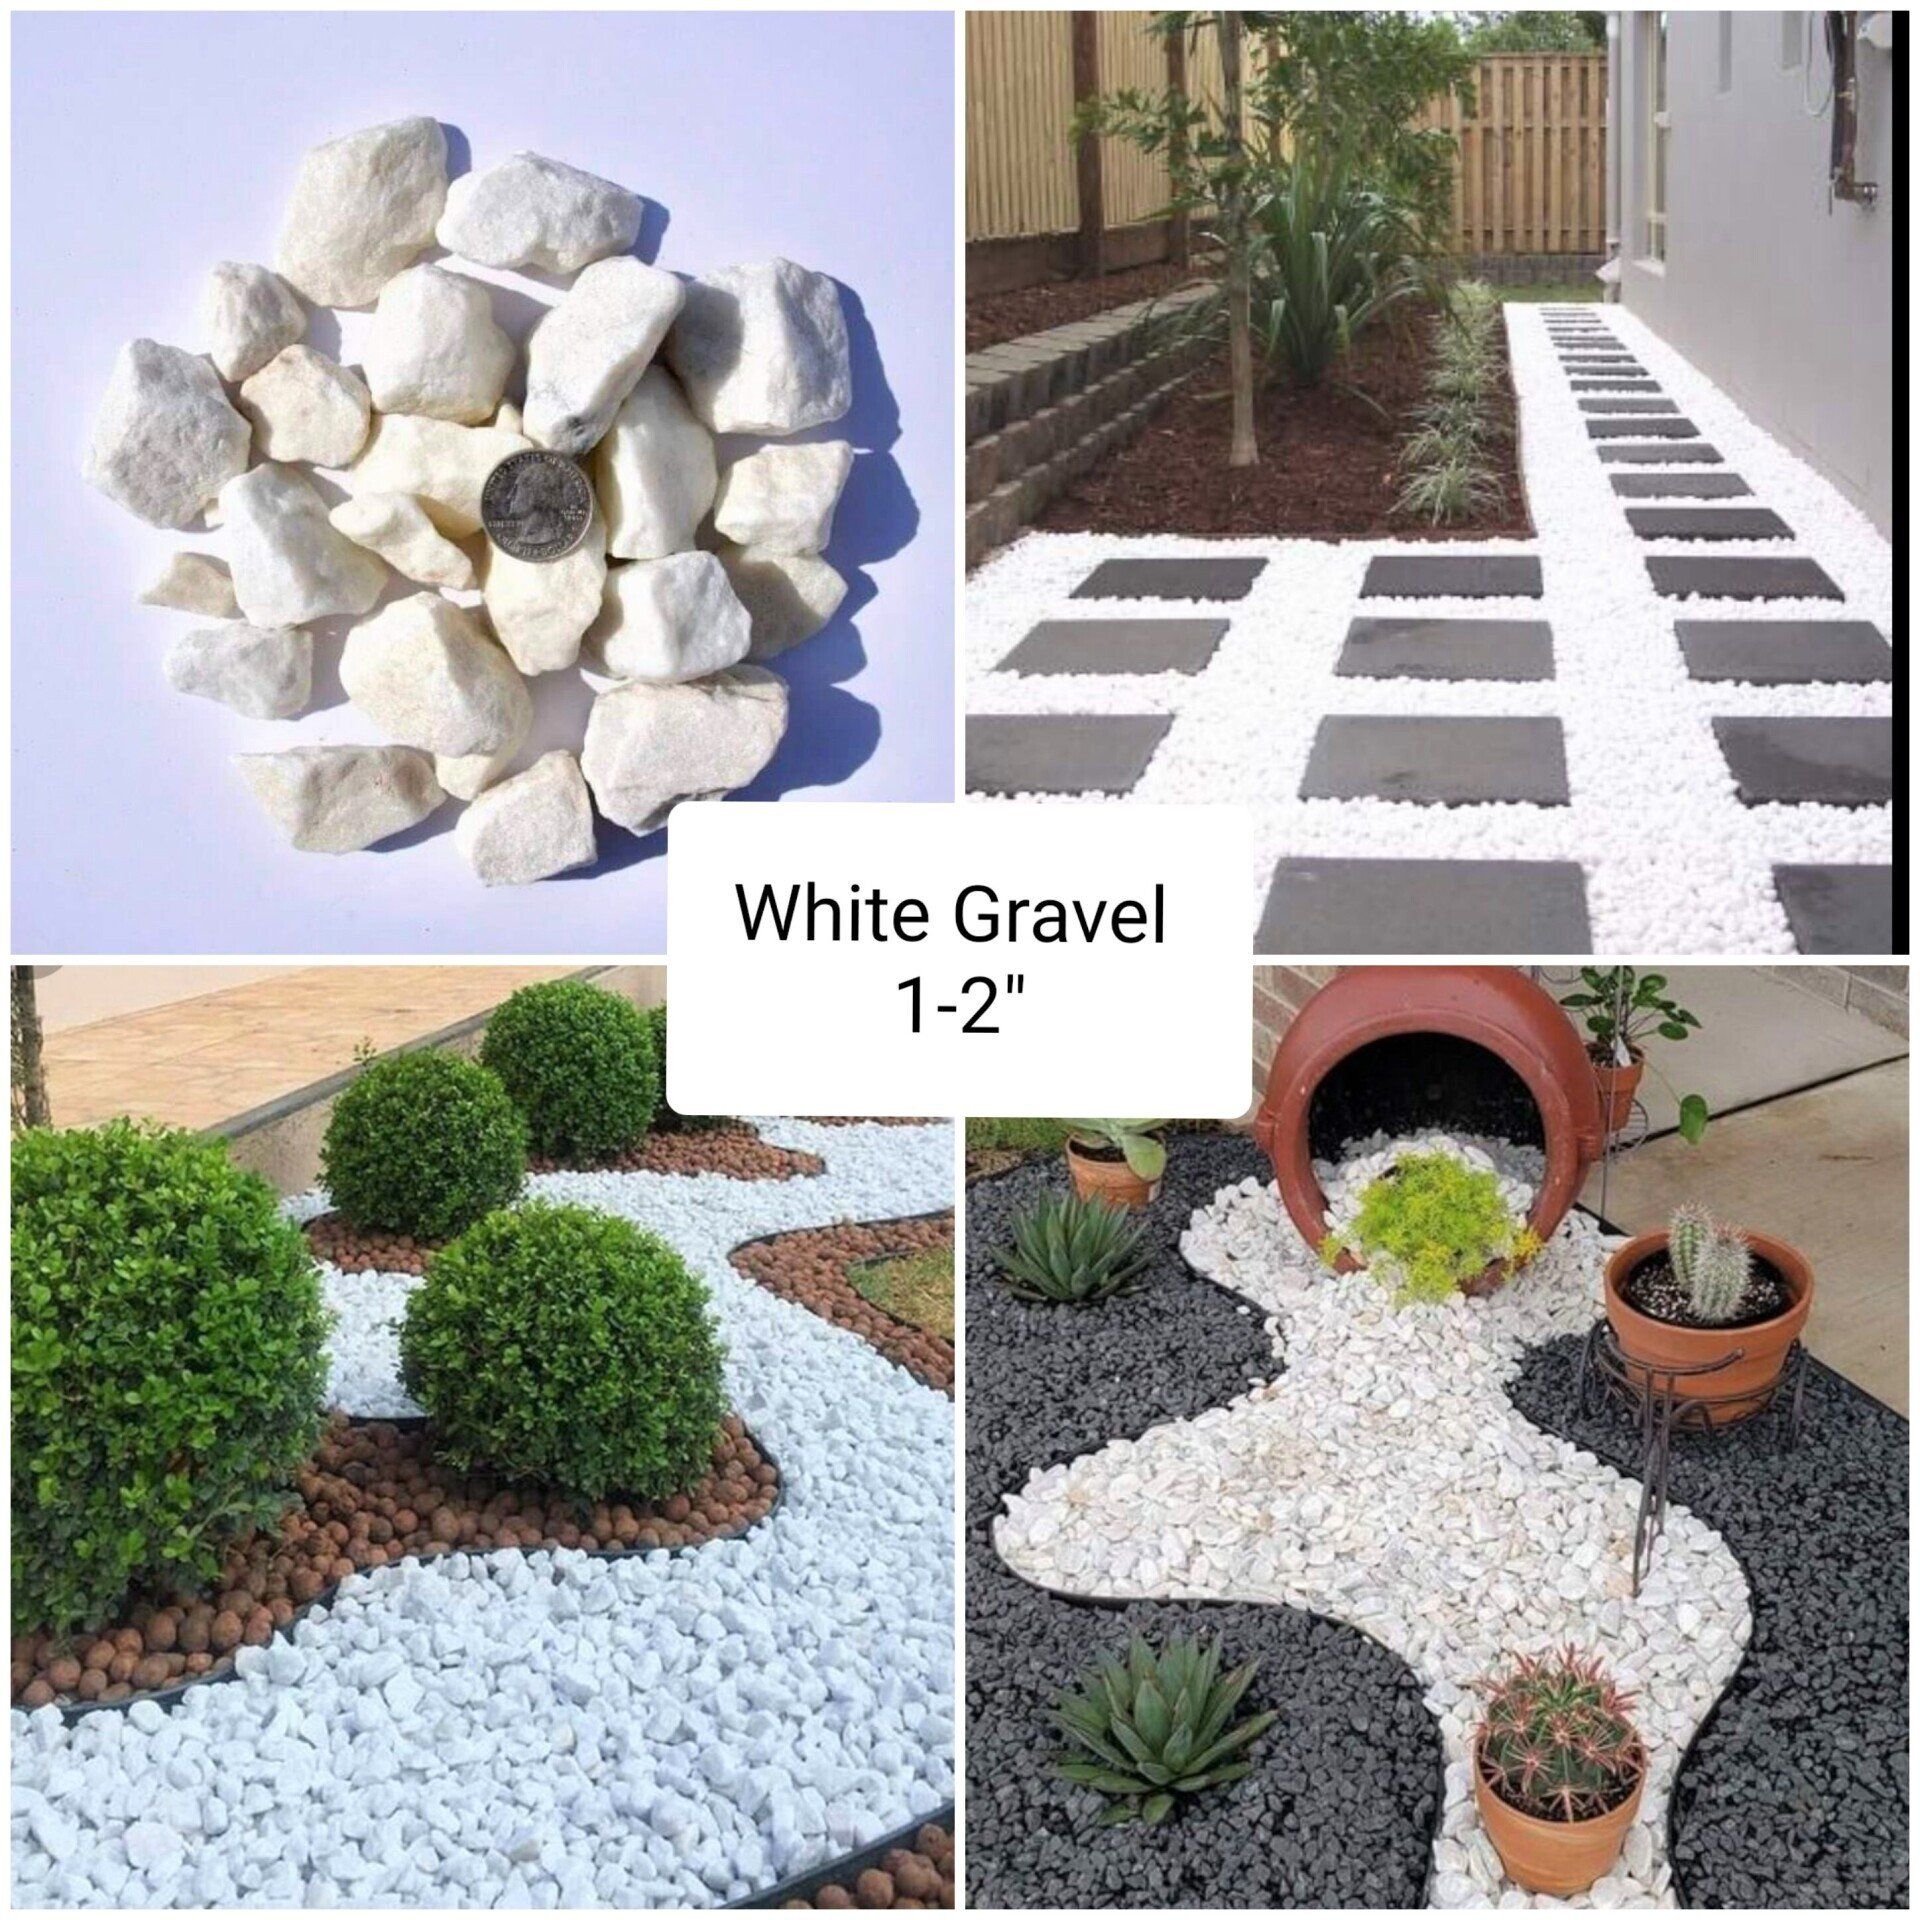 White Gravel 1-2